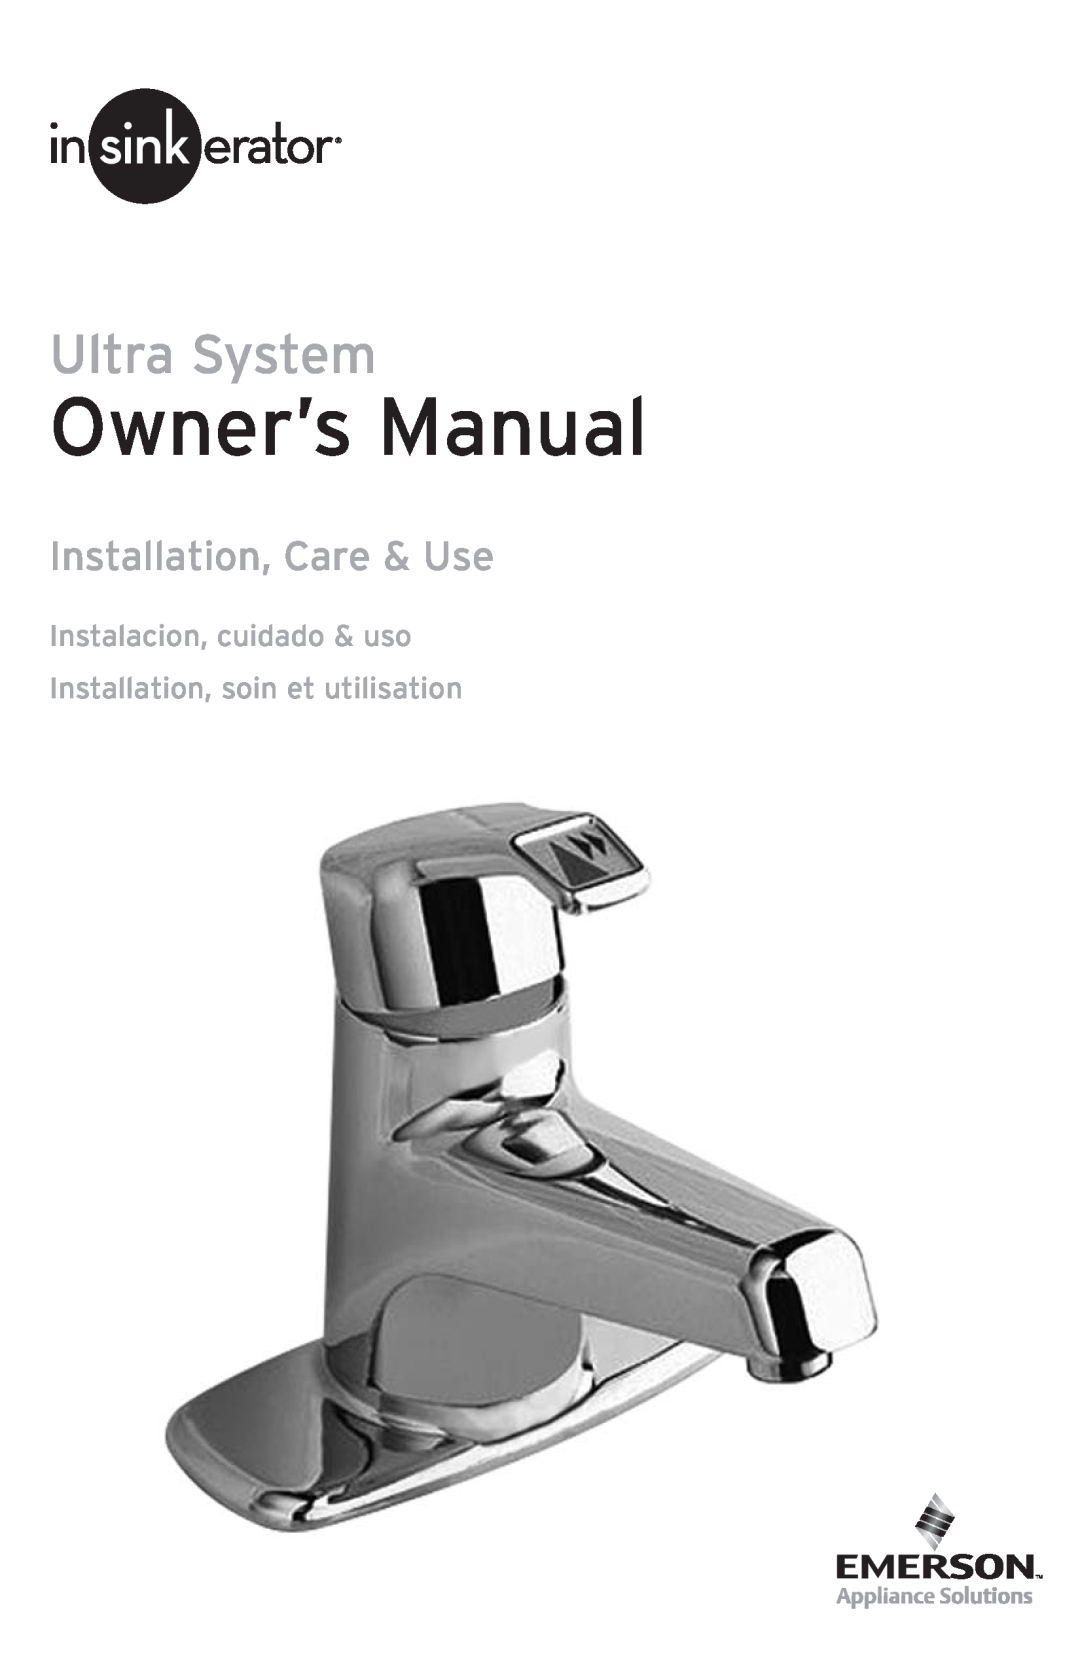 Emerson UWL owner manual Ultra System, Installation, Care & Use, Instalacion, cuidado & uso 